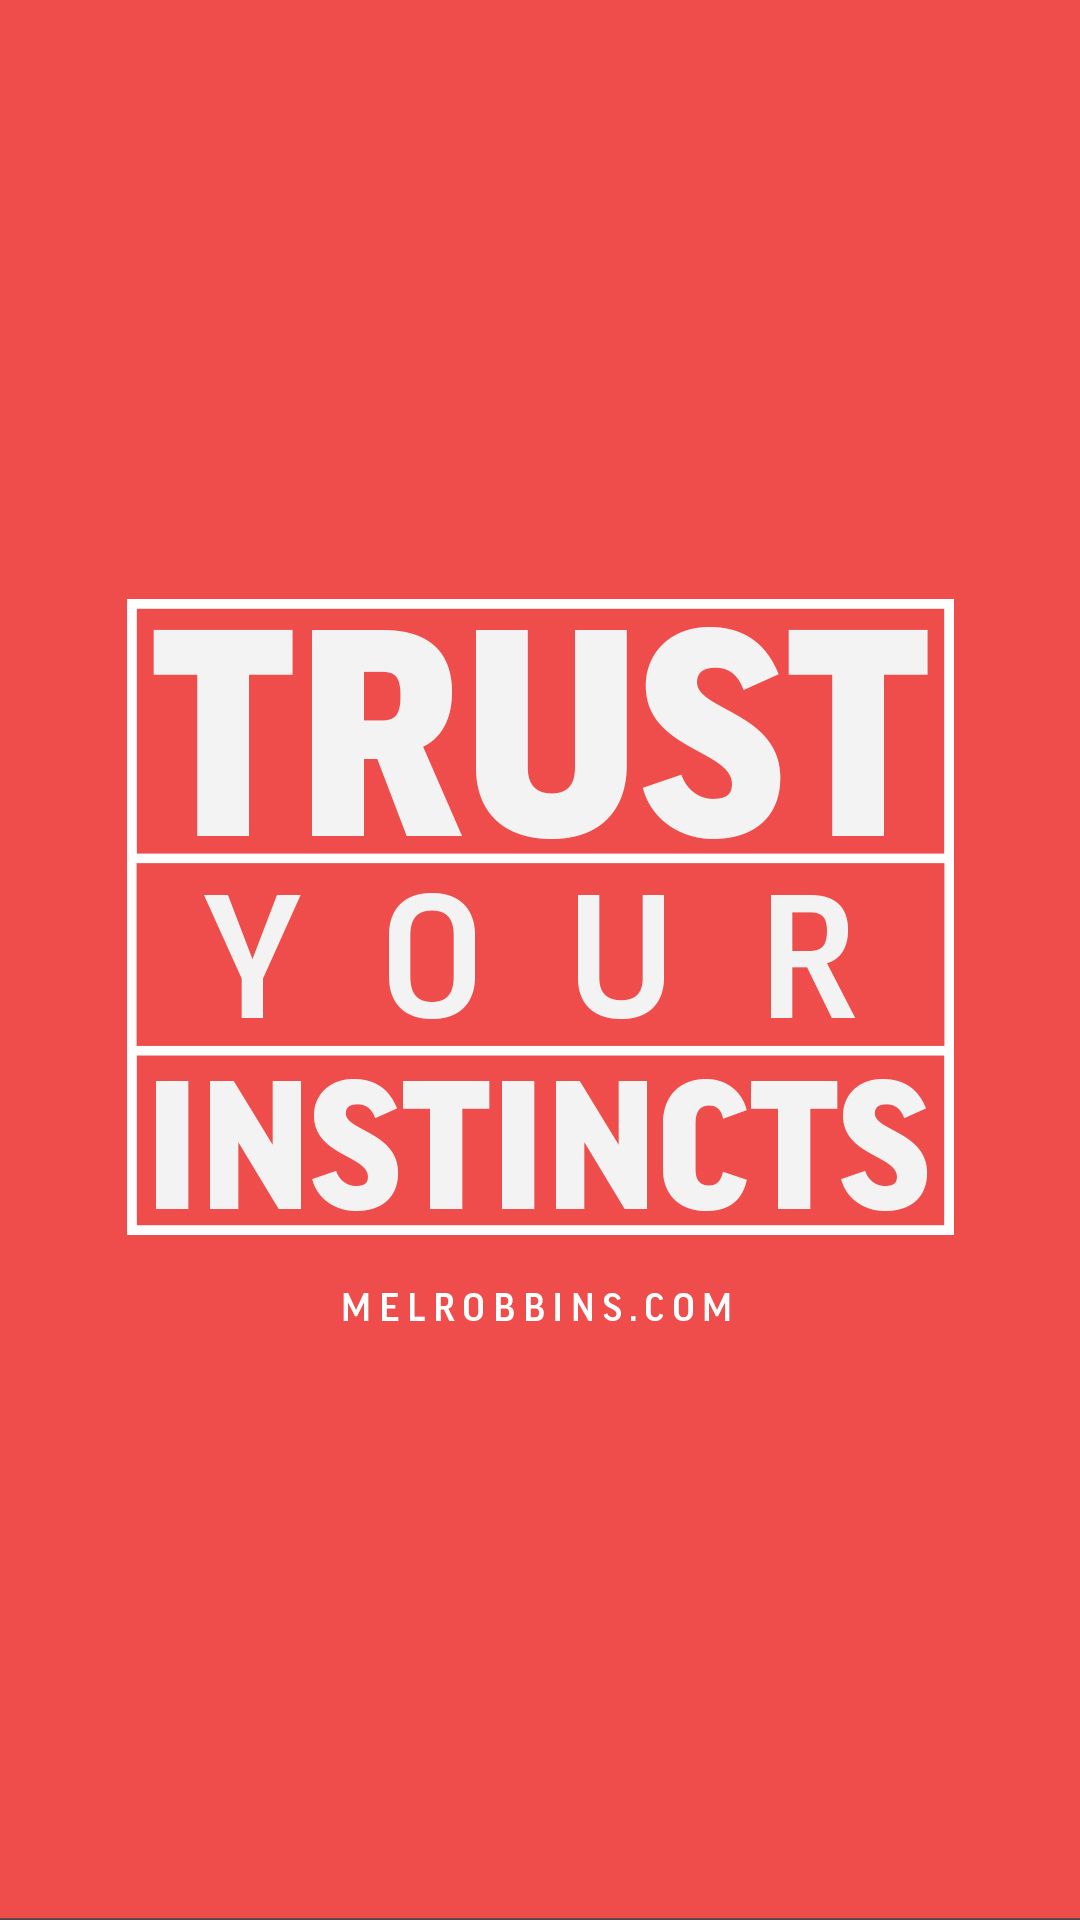 Trust Your Instincts- Mel Robbins wallpaper. Encouragement